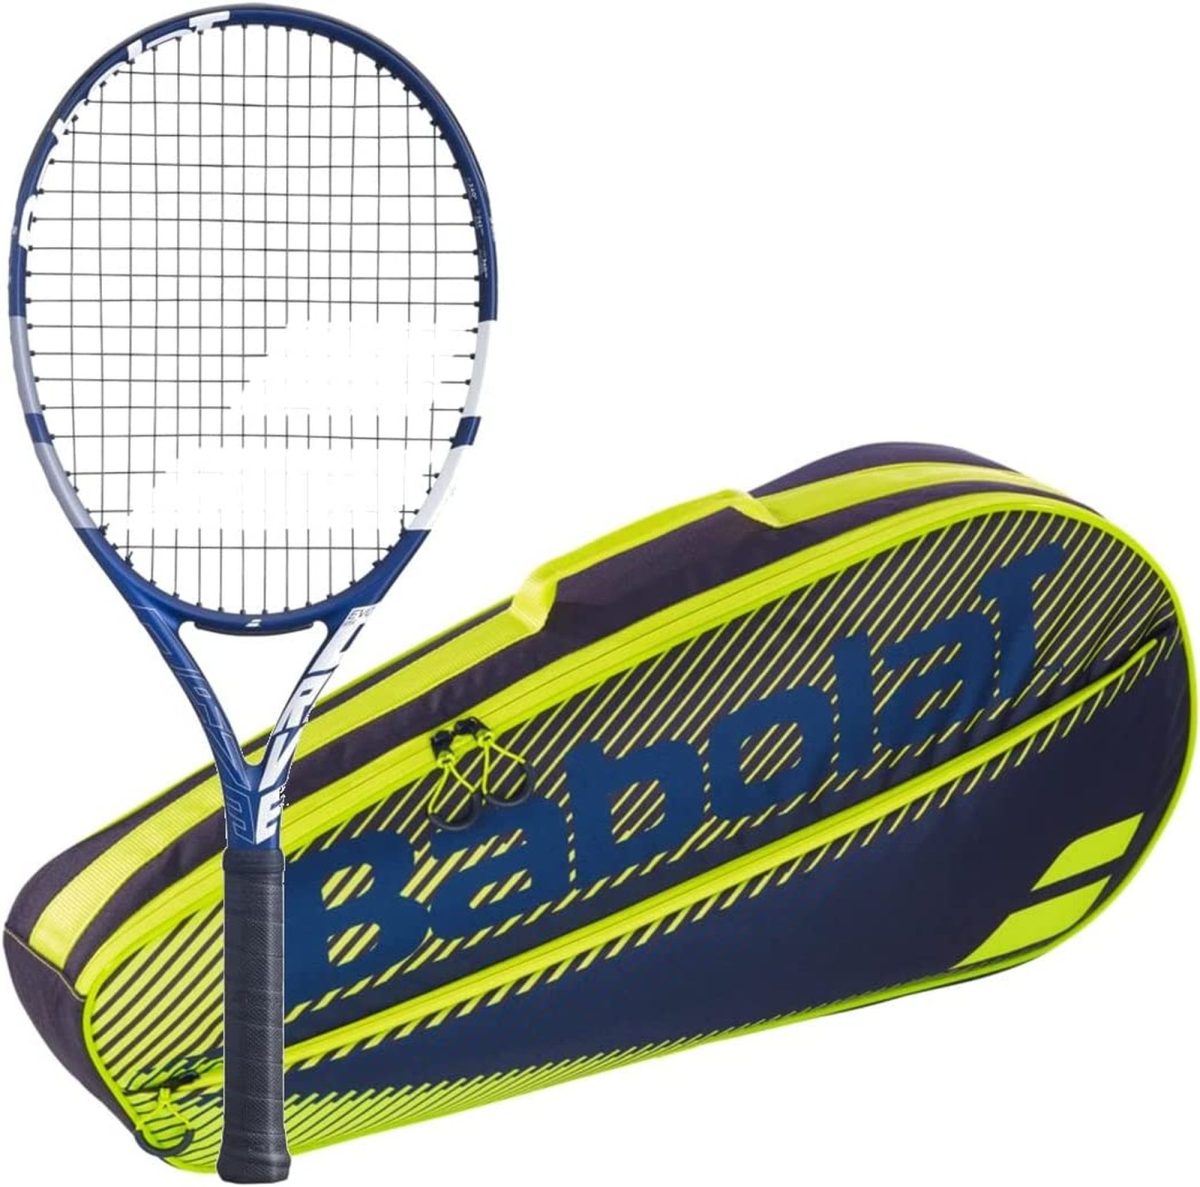 Babolat Evo Drive 115 + Yellow Club Bag Tennis Starter Bundle